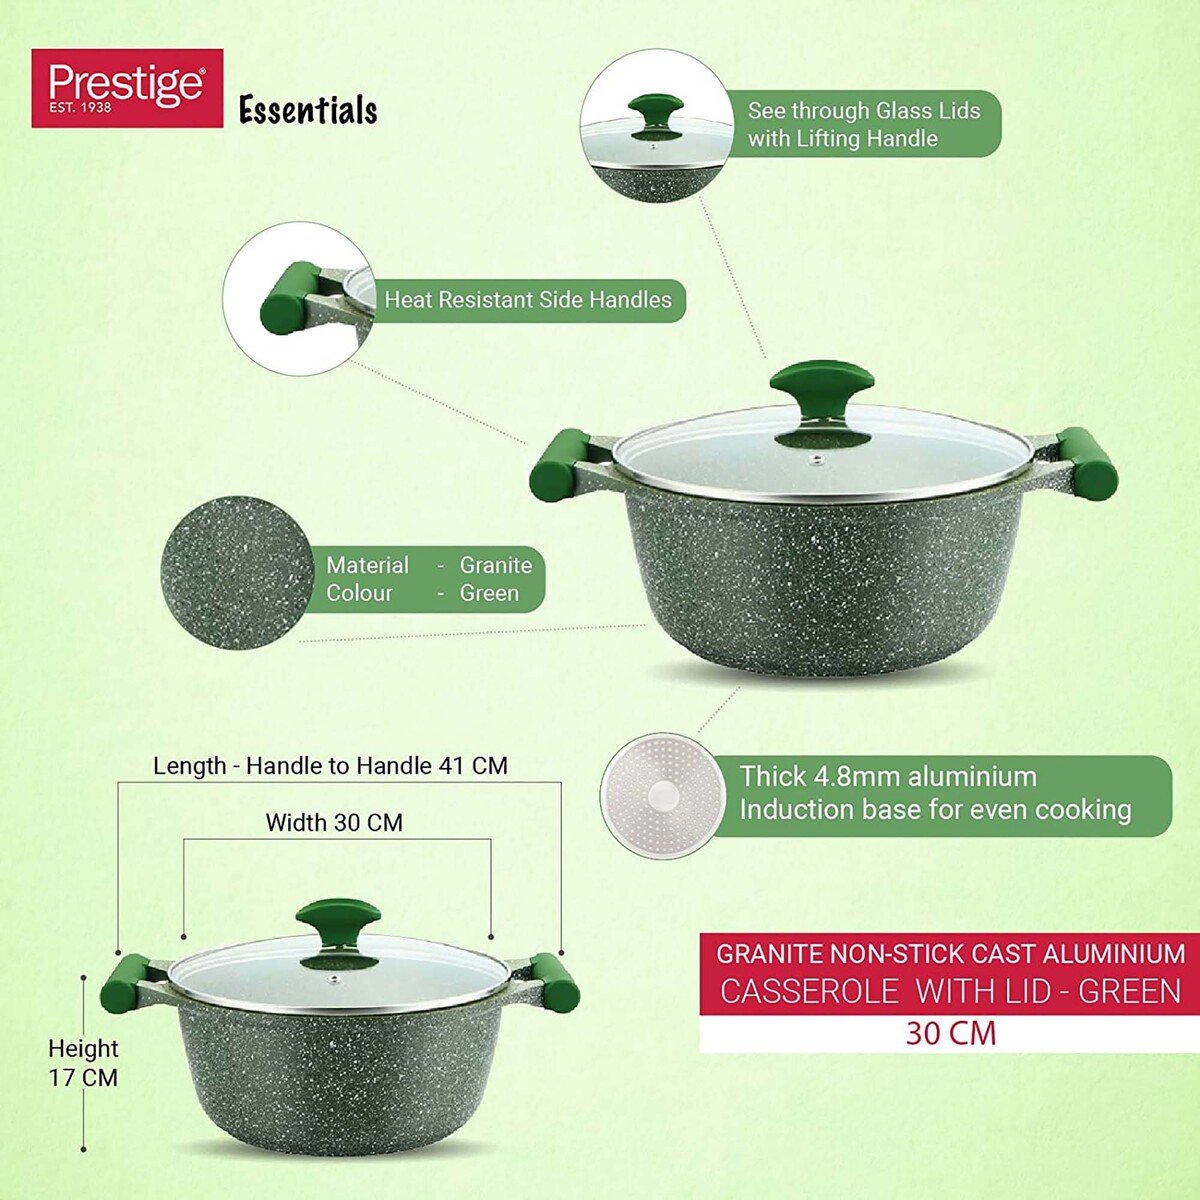 Prestige Essentials Granite Non-Stick Cast Aluminium Casserole with Lid, 30 cm, Green, PR81112